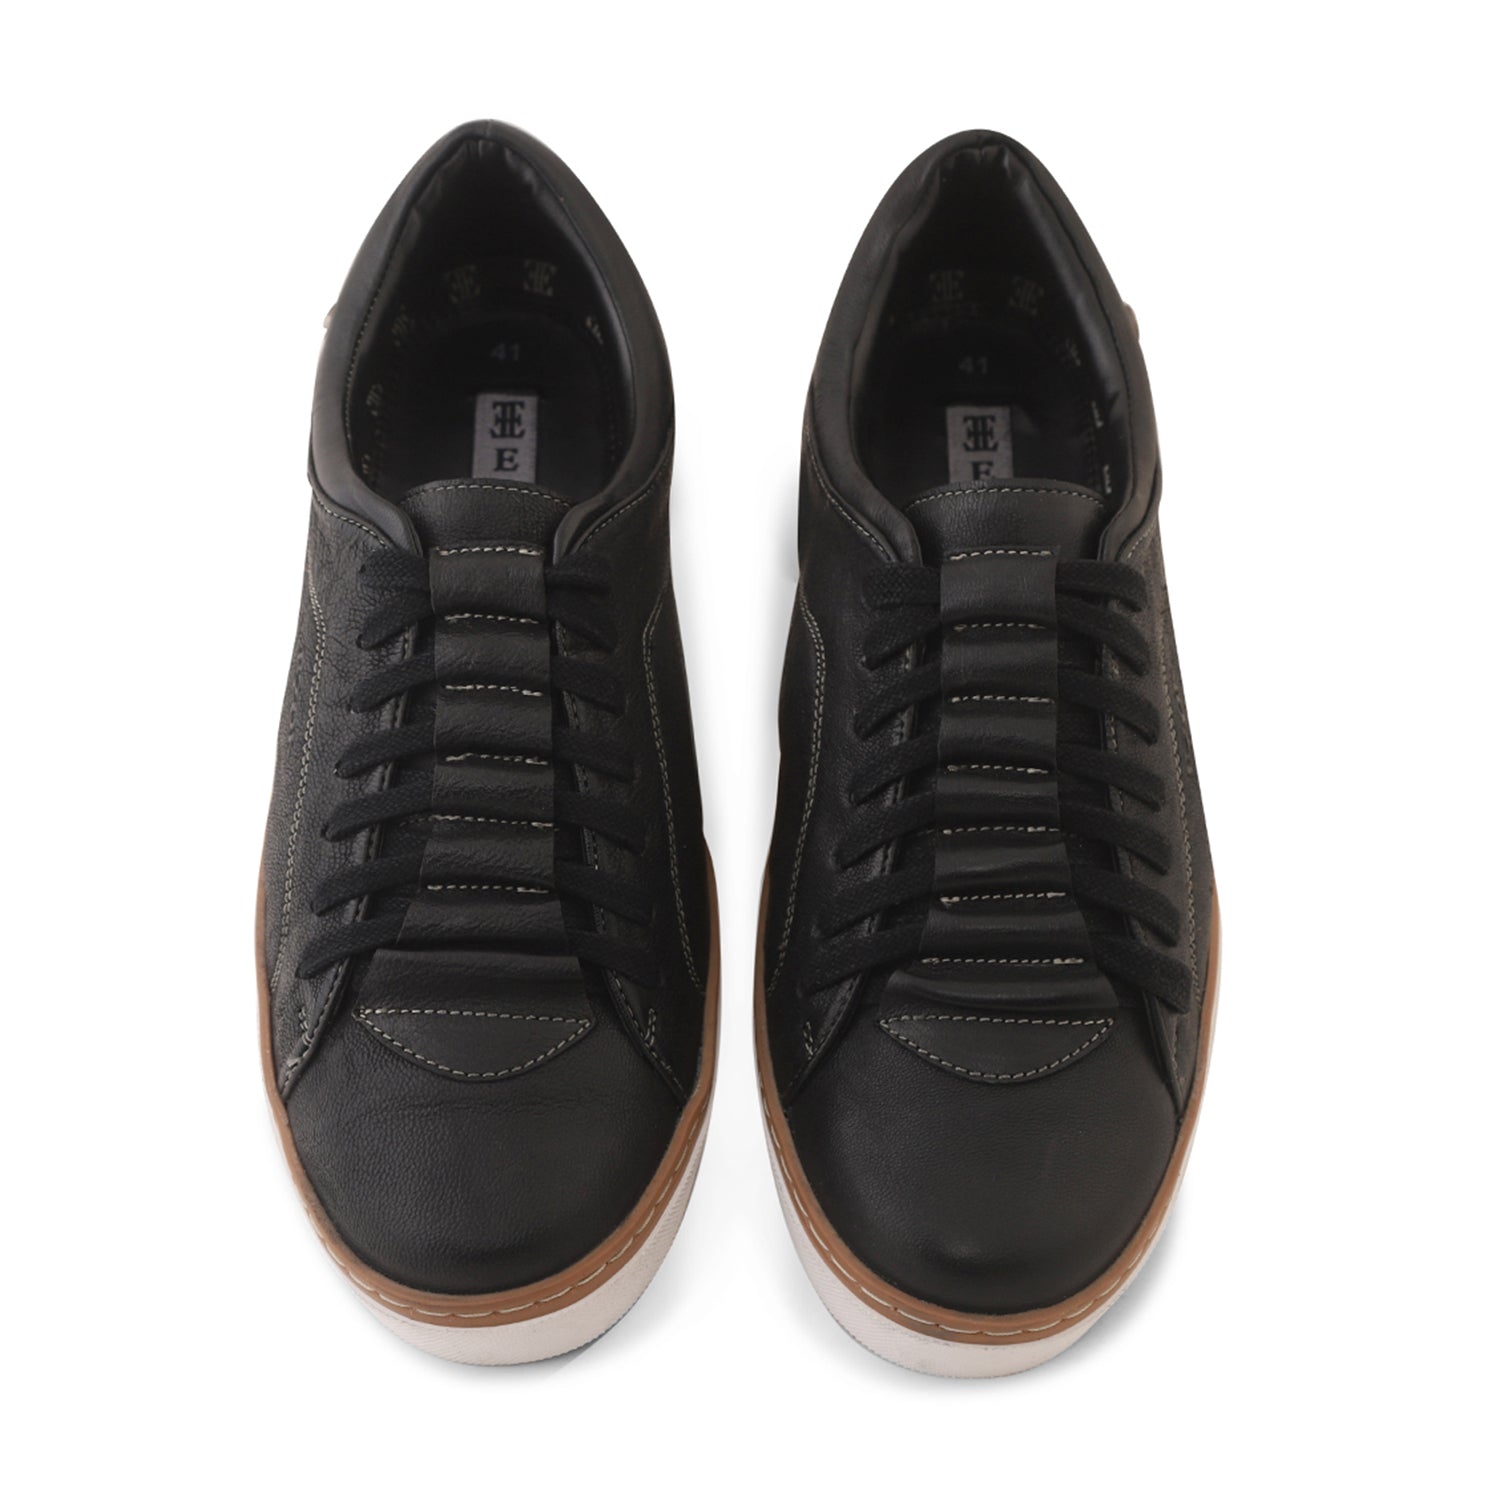 Ezok Men Black Casual Leather Sneakers